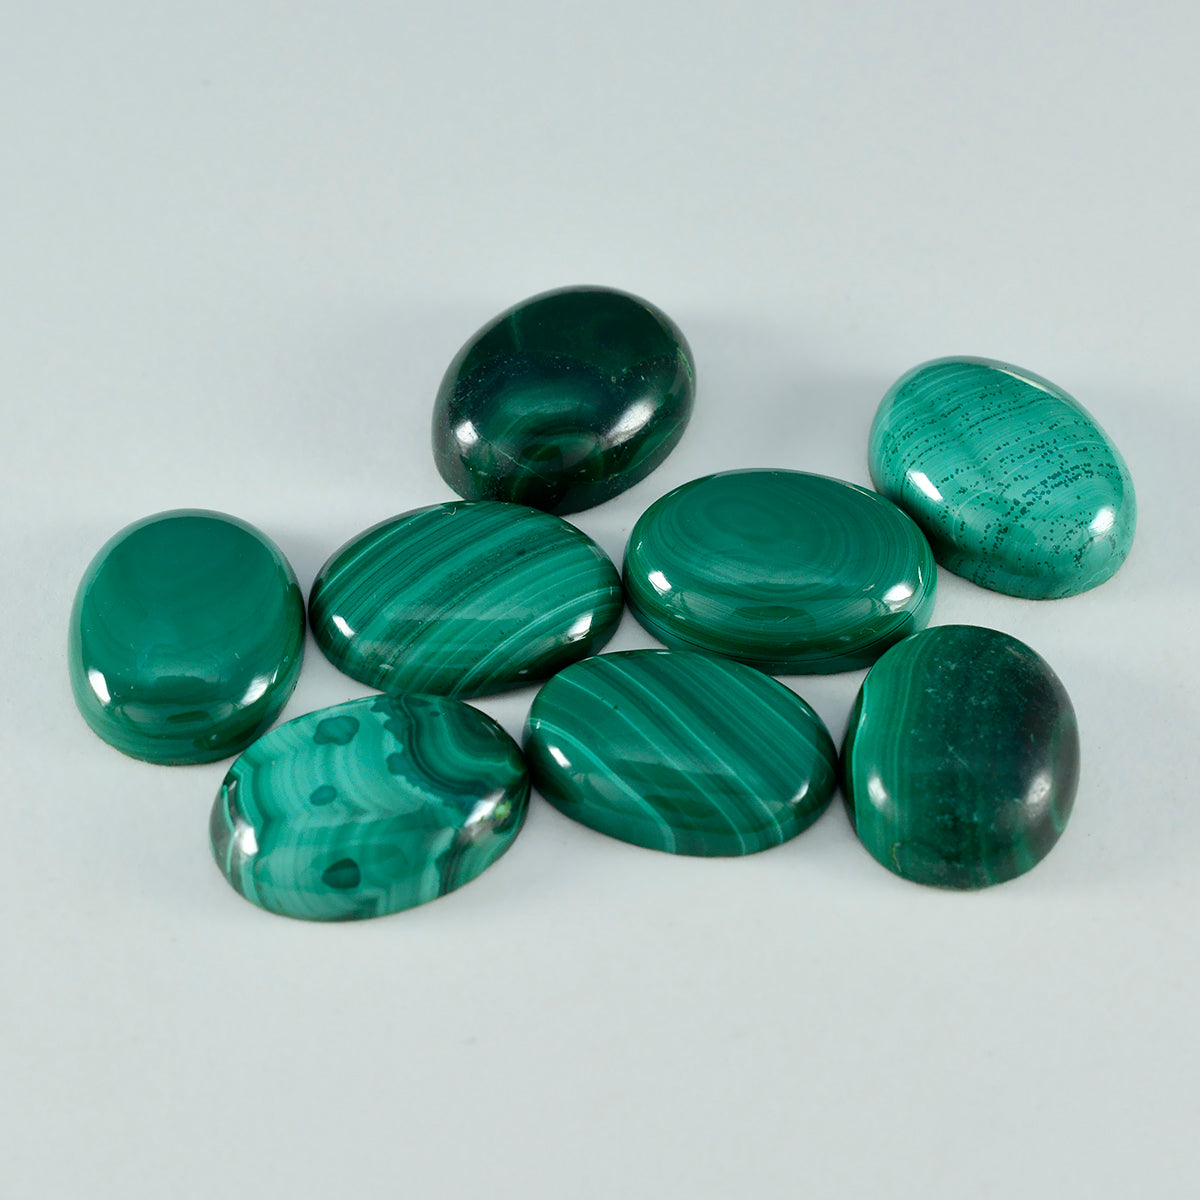 Riyogems 1PC Green Malachite Cabochon 10x12 mm Oval Shape A Quality Loose Stone